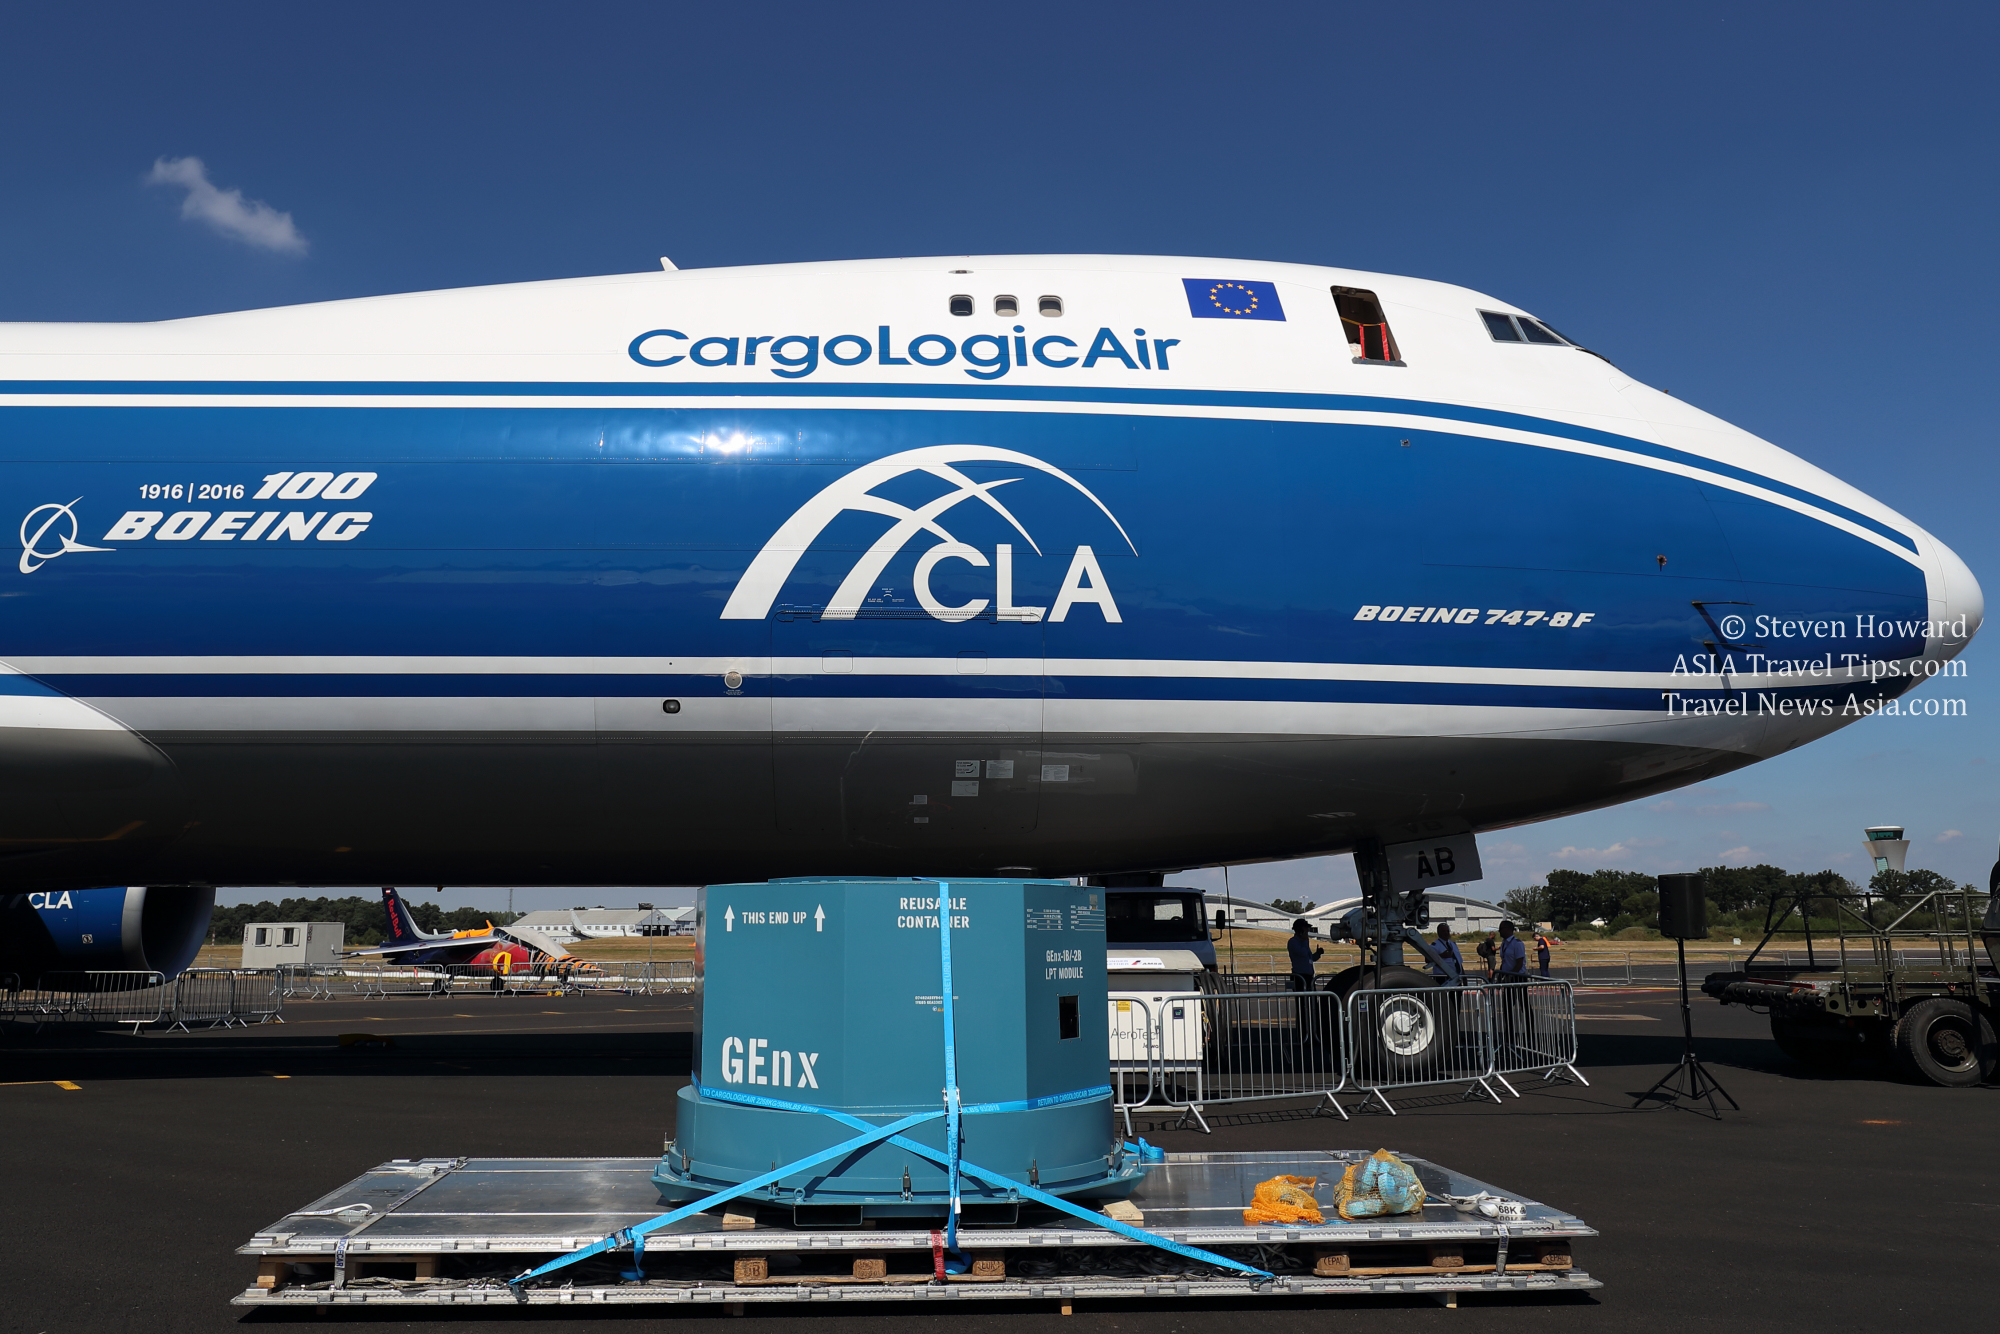 CargoLogicAir Boeing 747-8F at Farnborough International Airshow 2018. Click to enlarge.